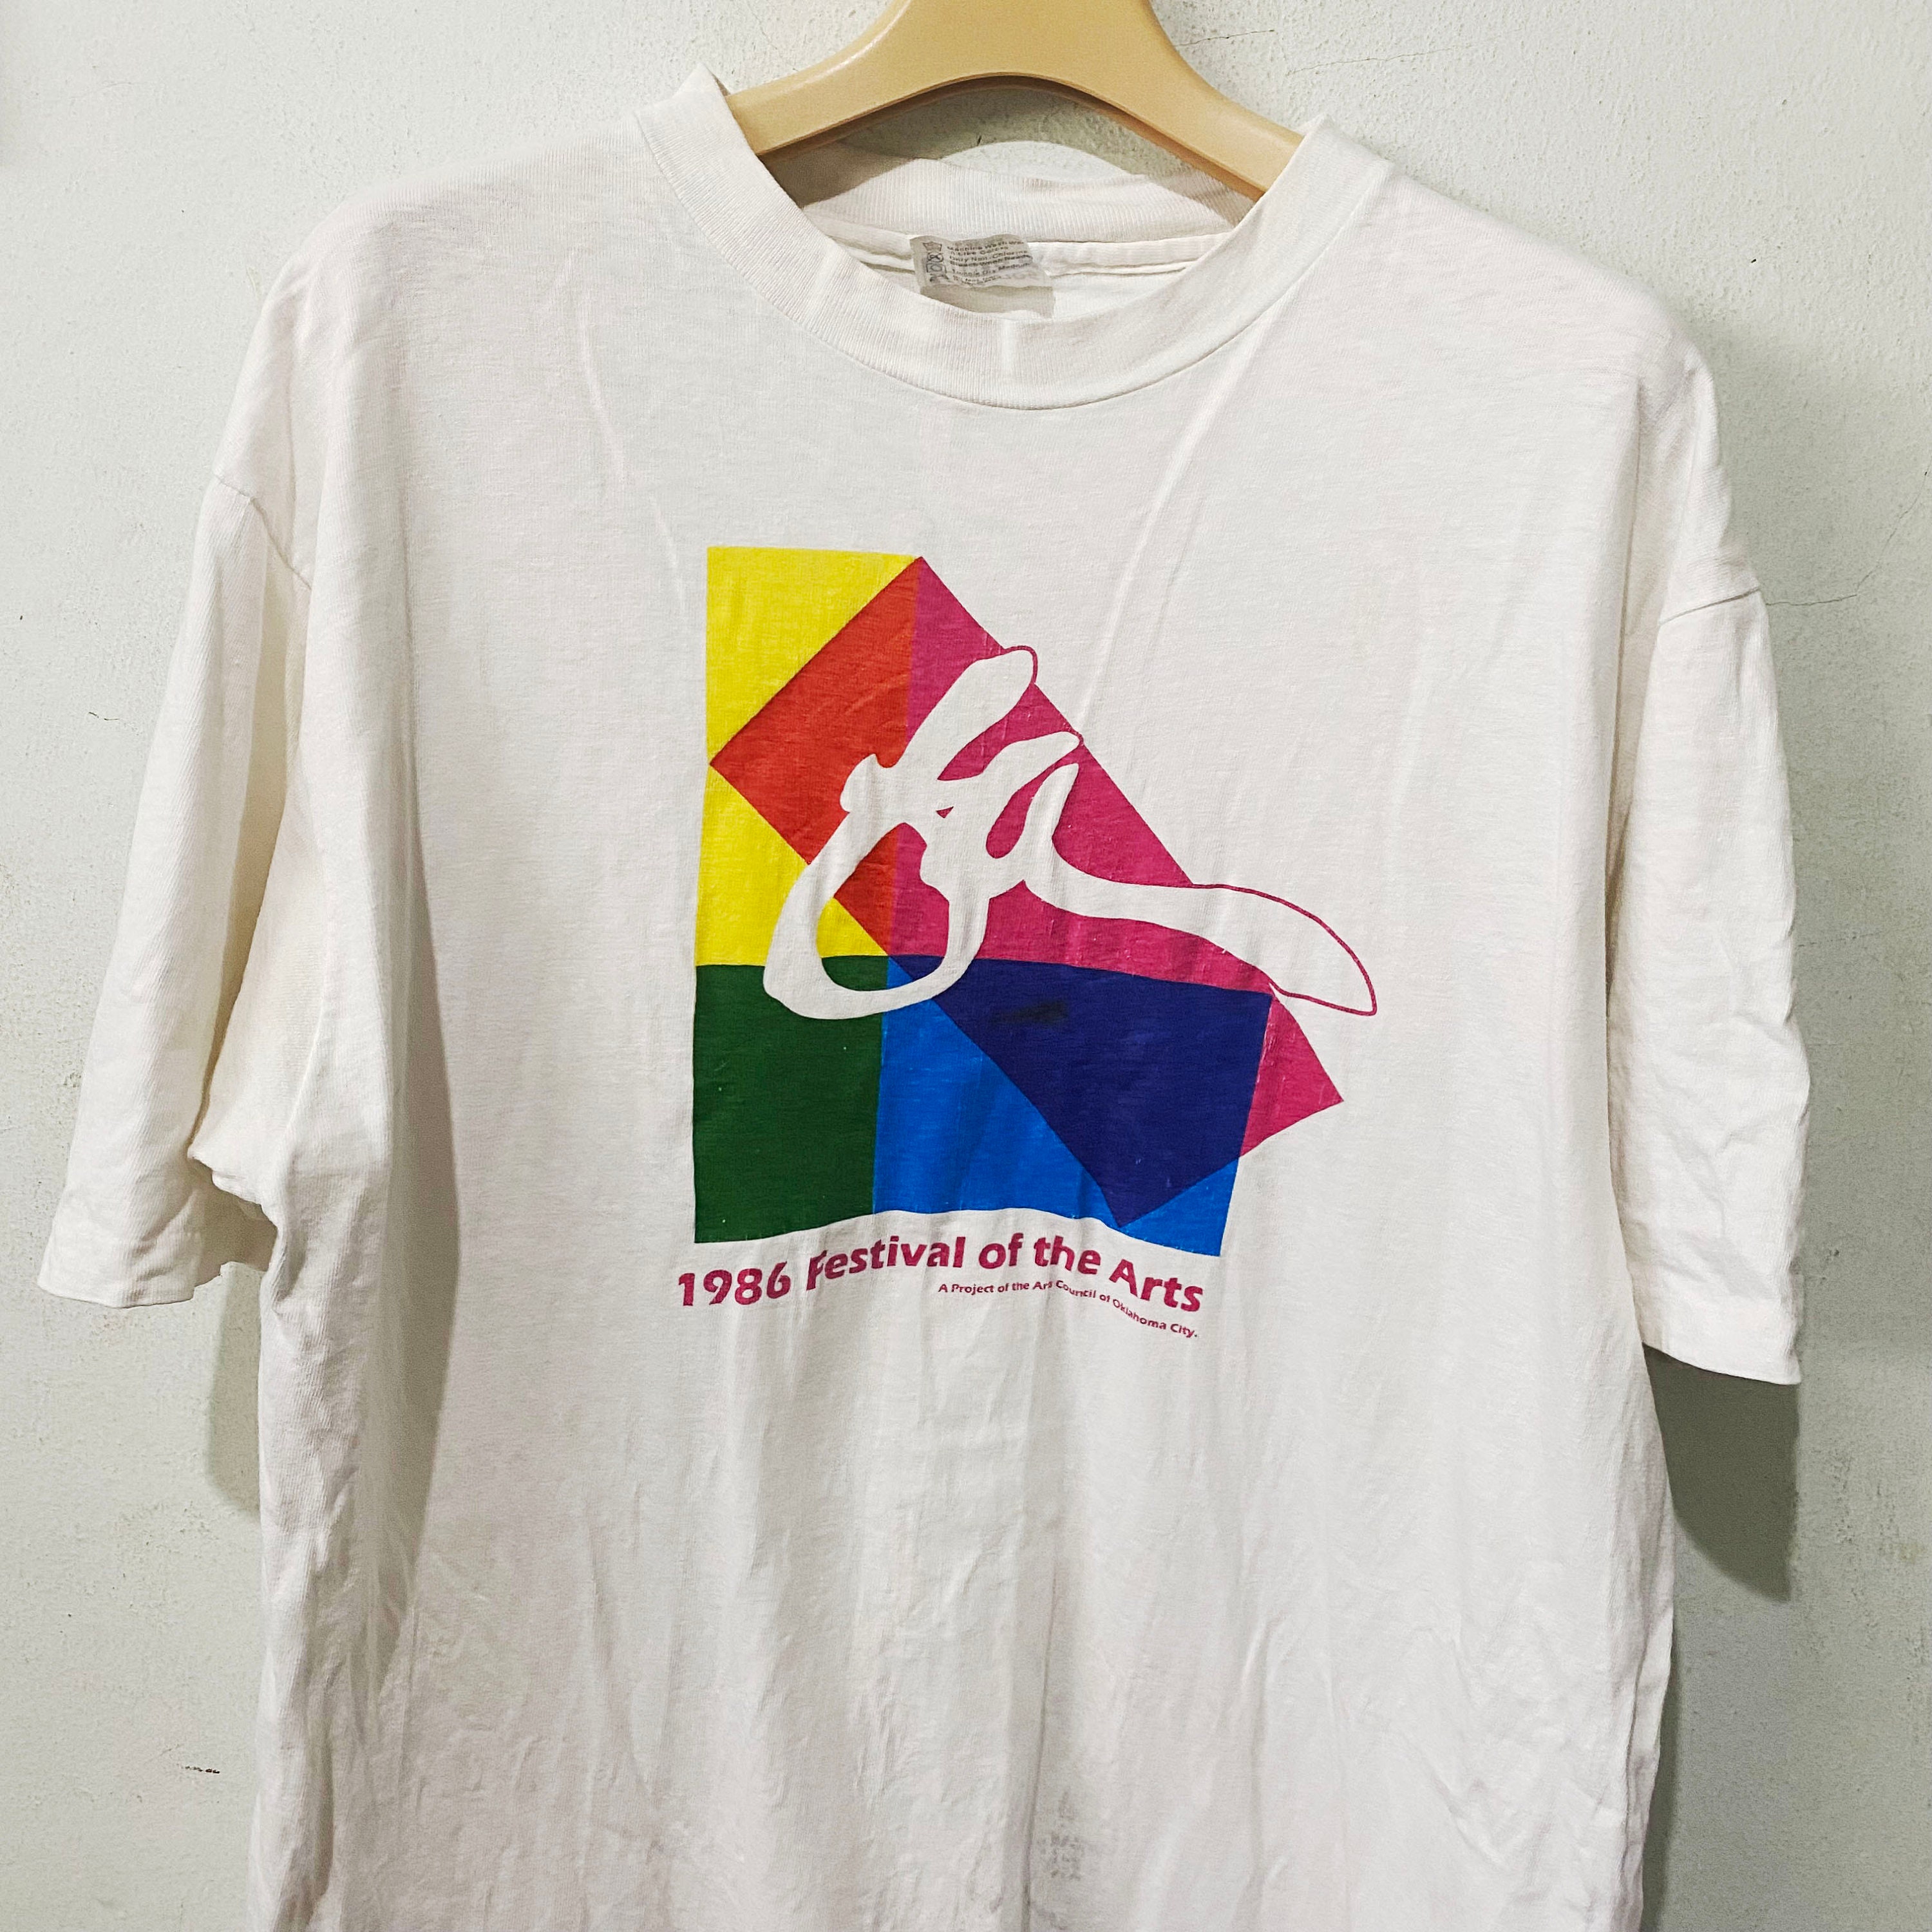 Vintage 80s Festival of Arts Shirt Size L - Etsy